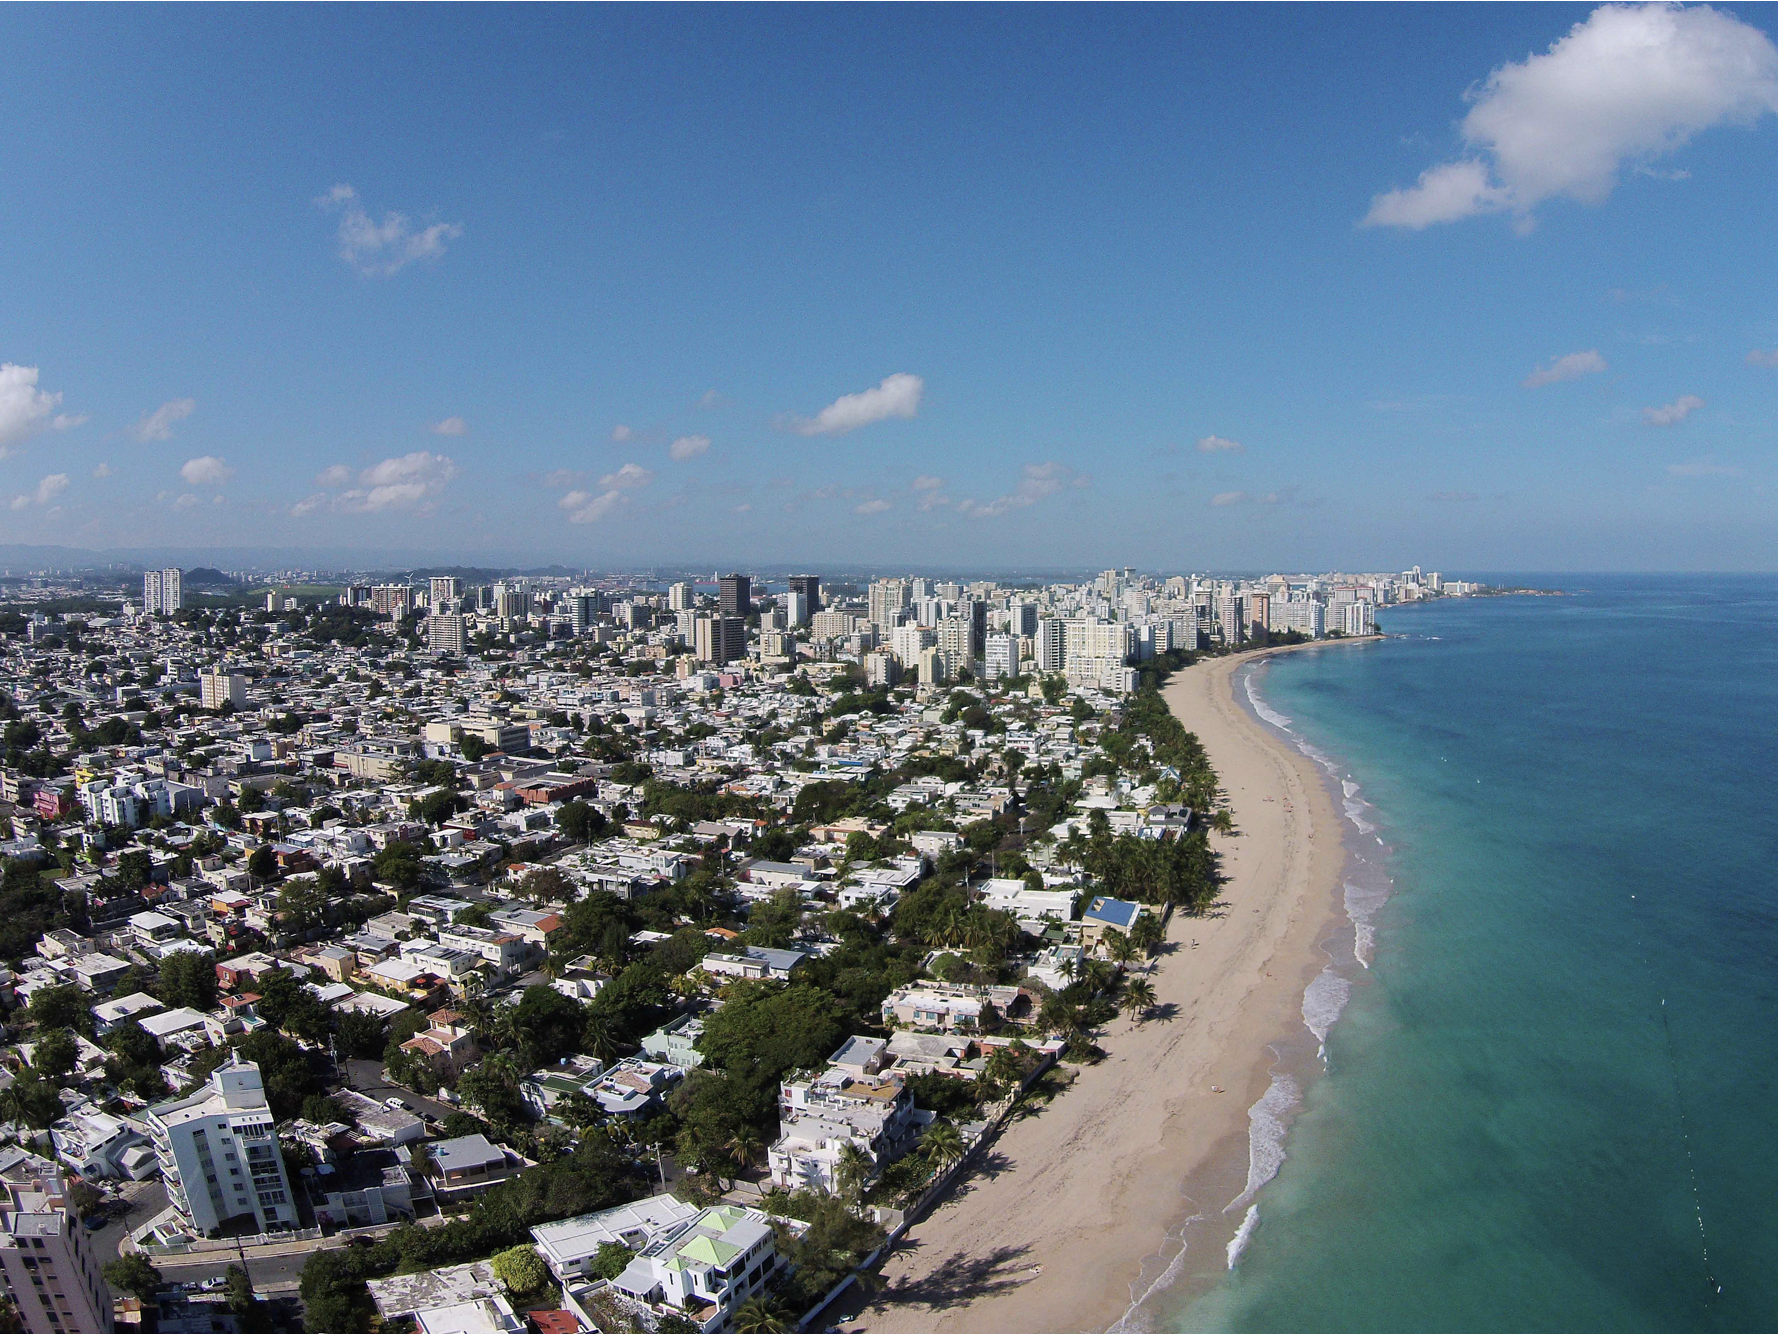 15 stunning photos of Puerto Rico - Business Insider